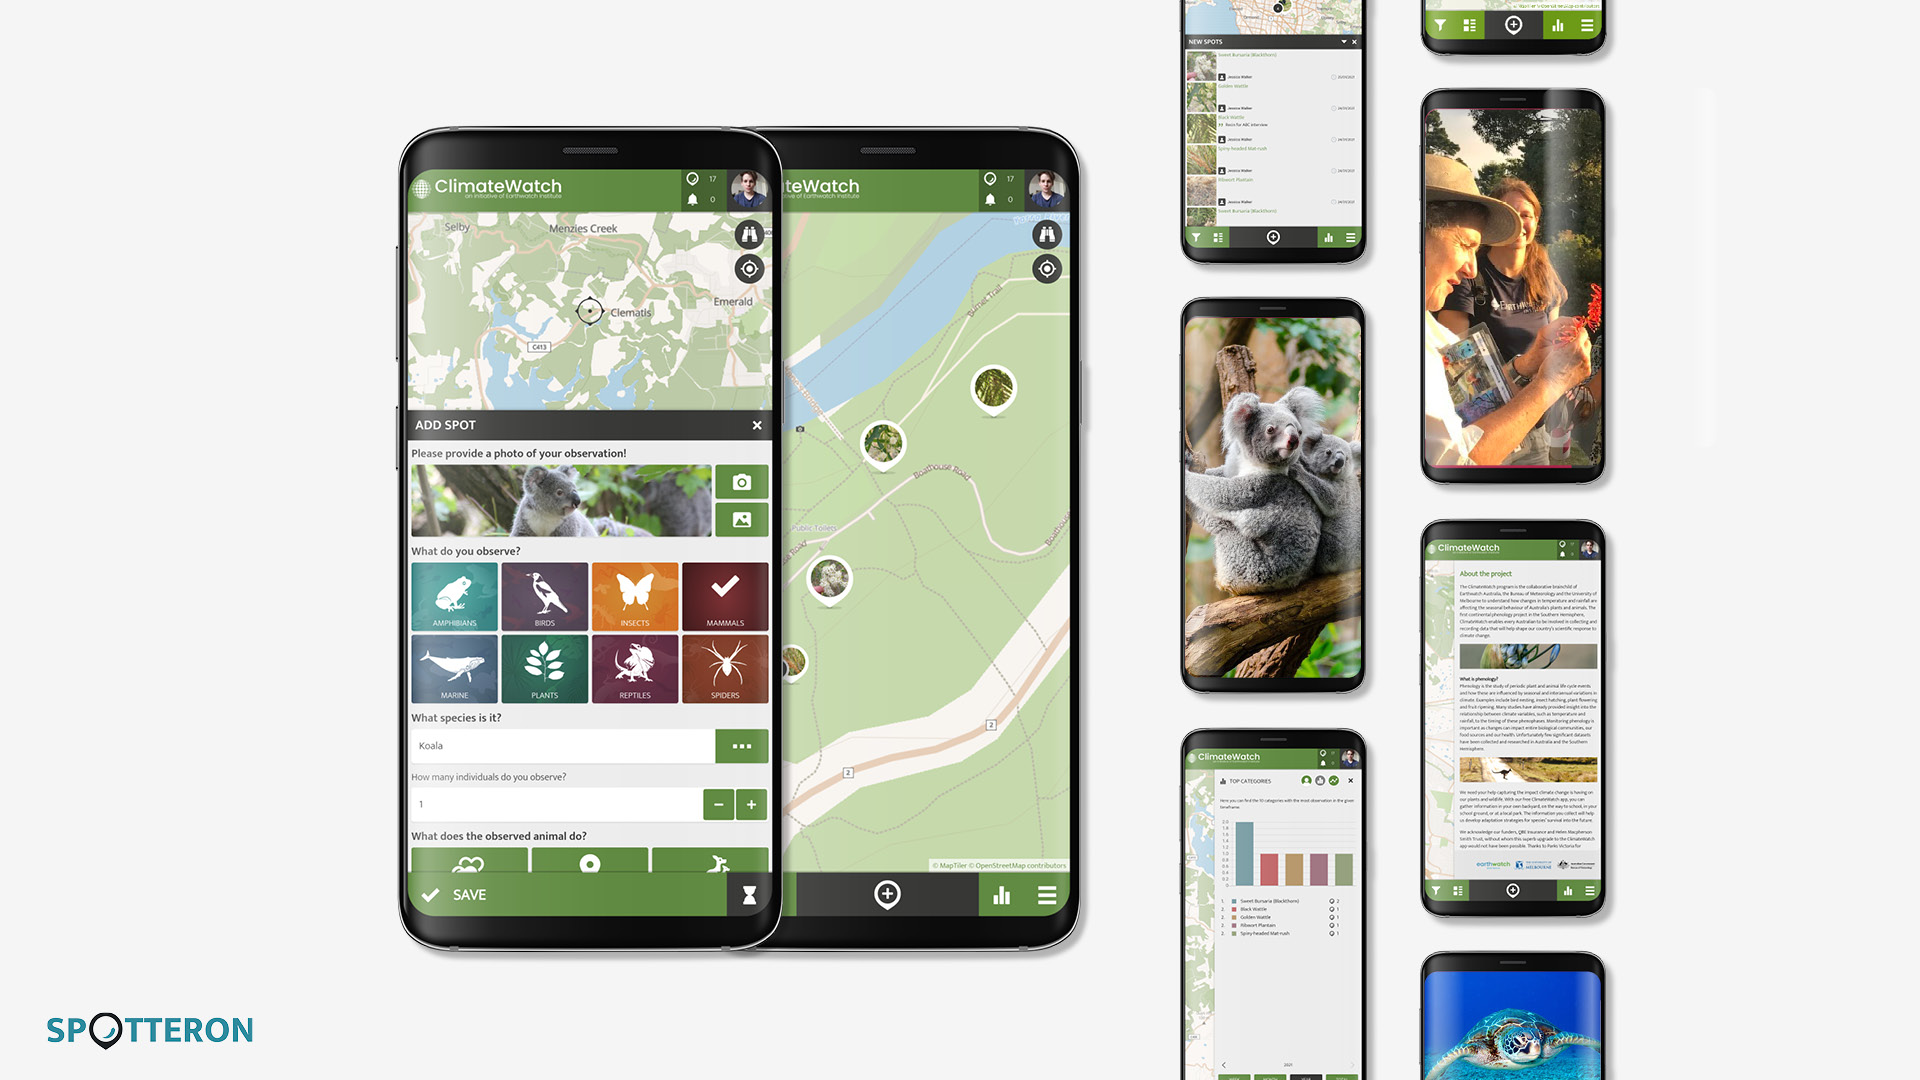 Climatewatch App spotteron presentation smartphone screens